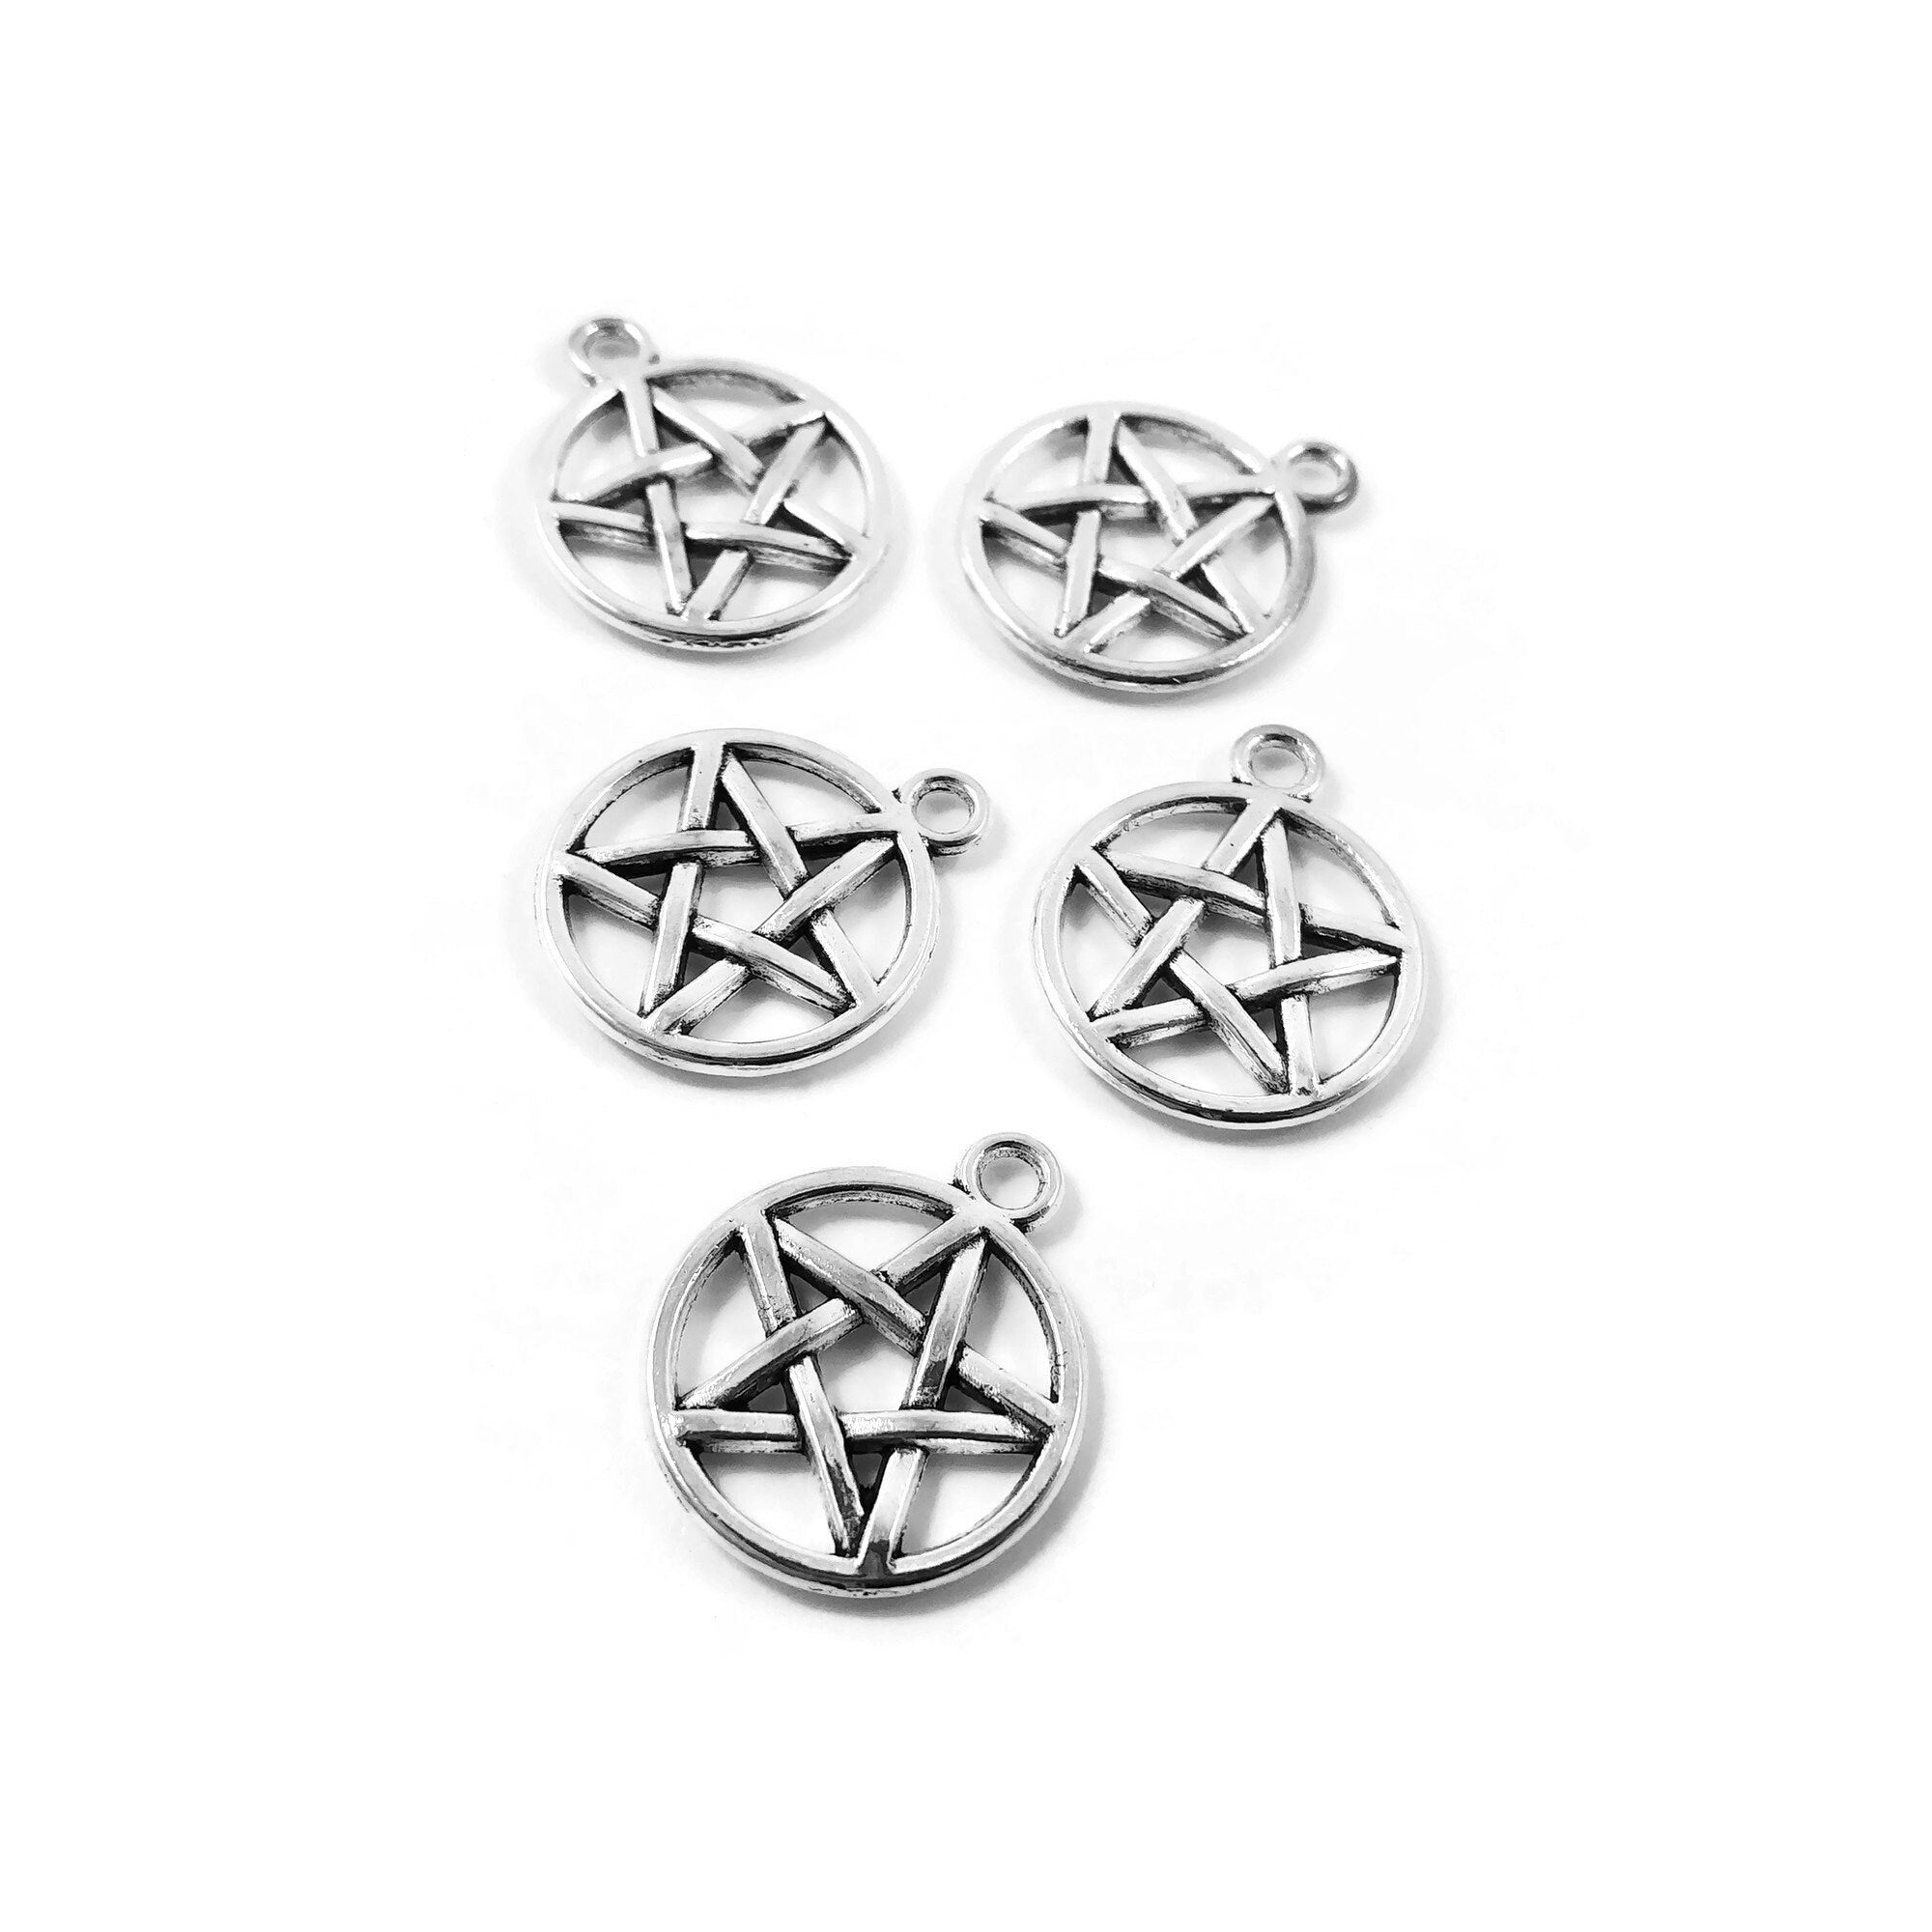 Silver pentagram charm, 20mm metal pendants, Pentacle star for jewelry making